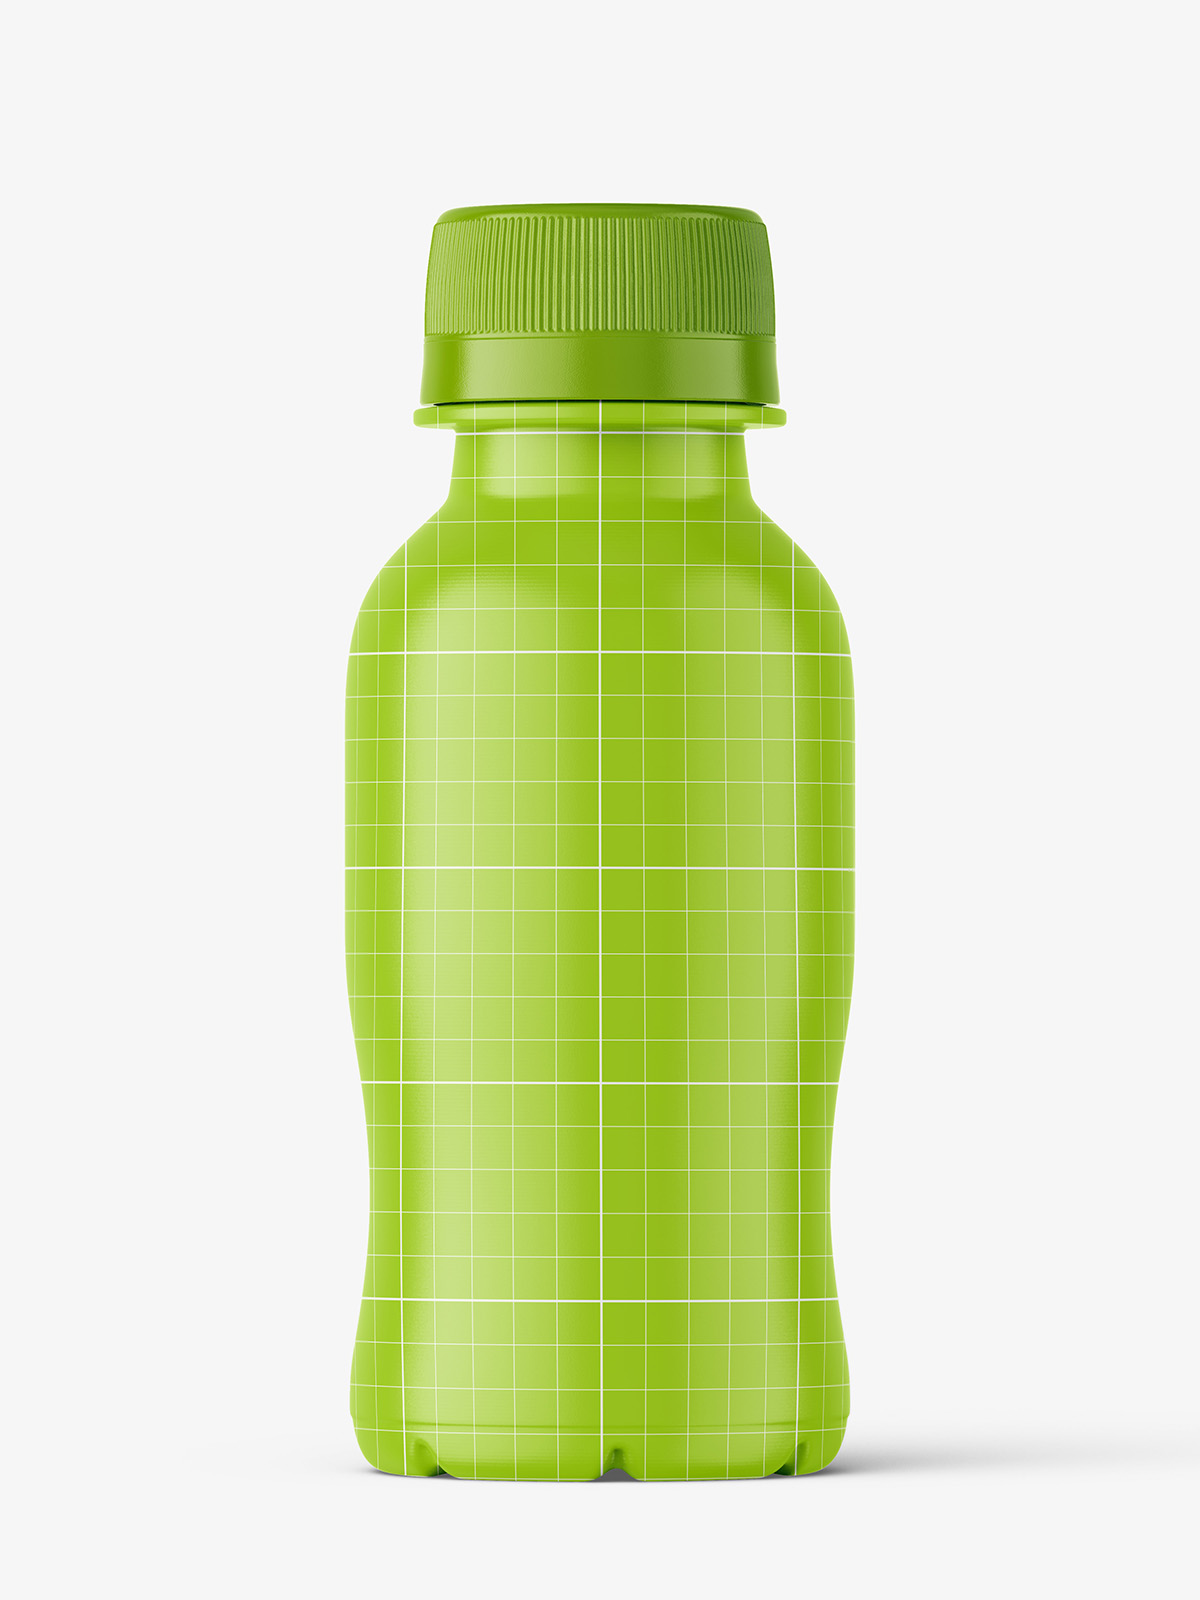 Small green juice bottle mockup - Smarty Mockups